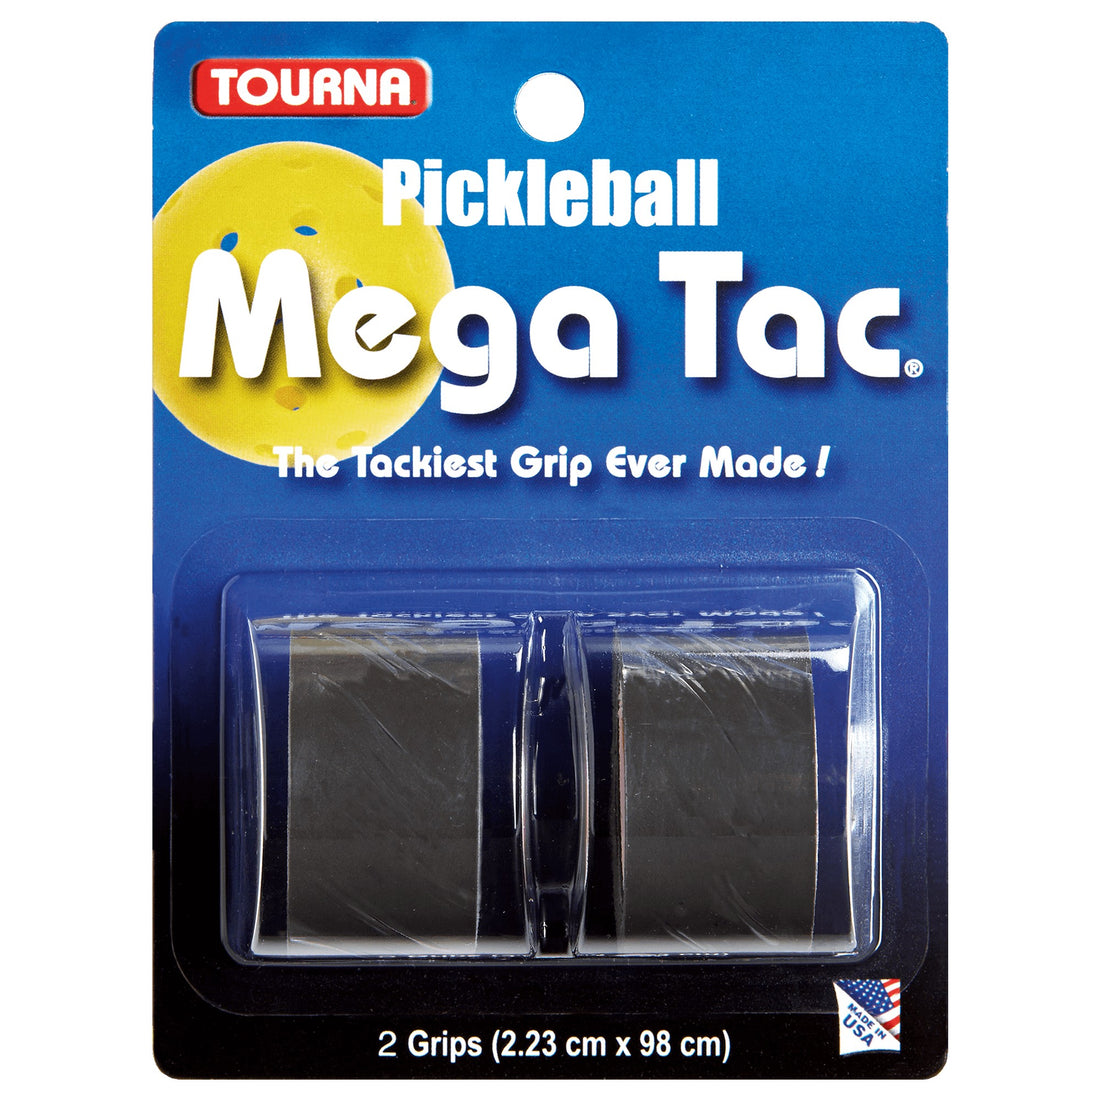 Tourna Pickleball Mega Tac Overgrip Racquet Point